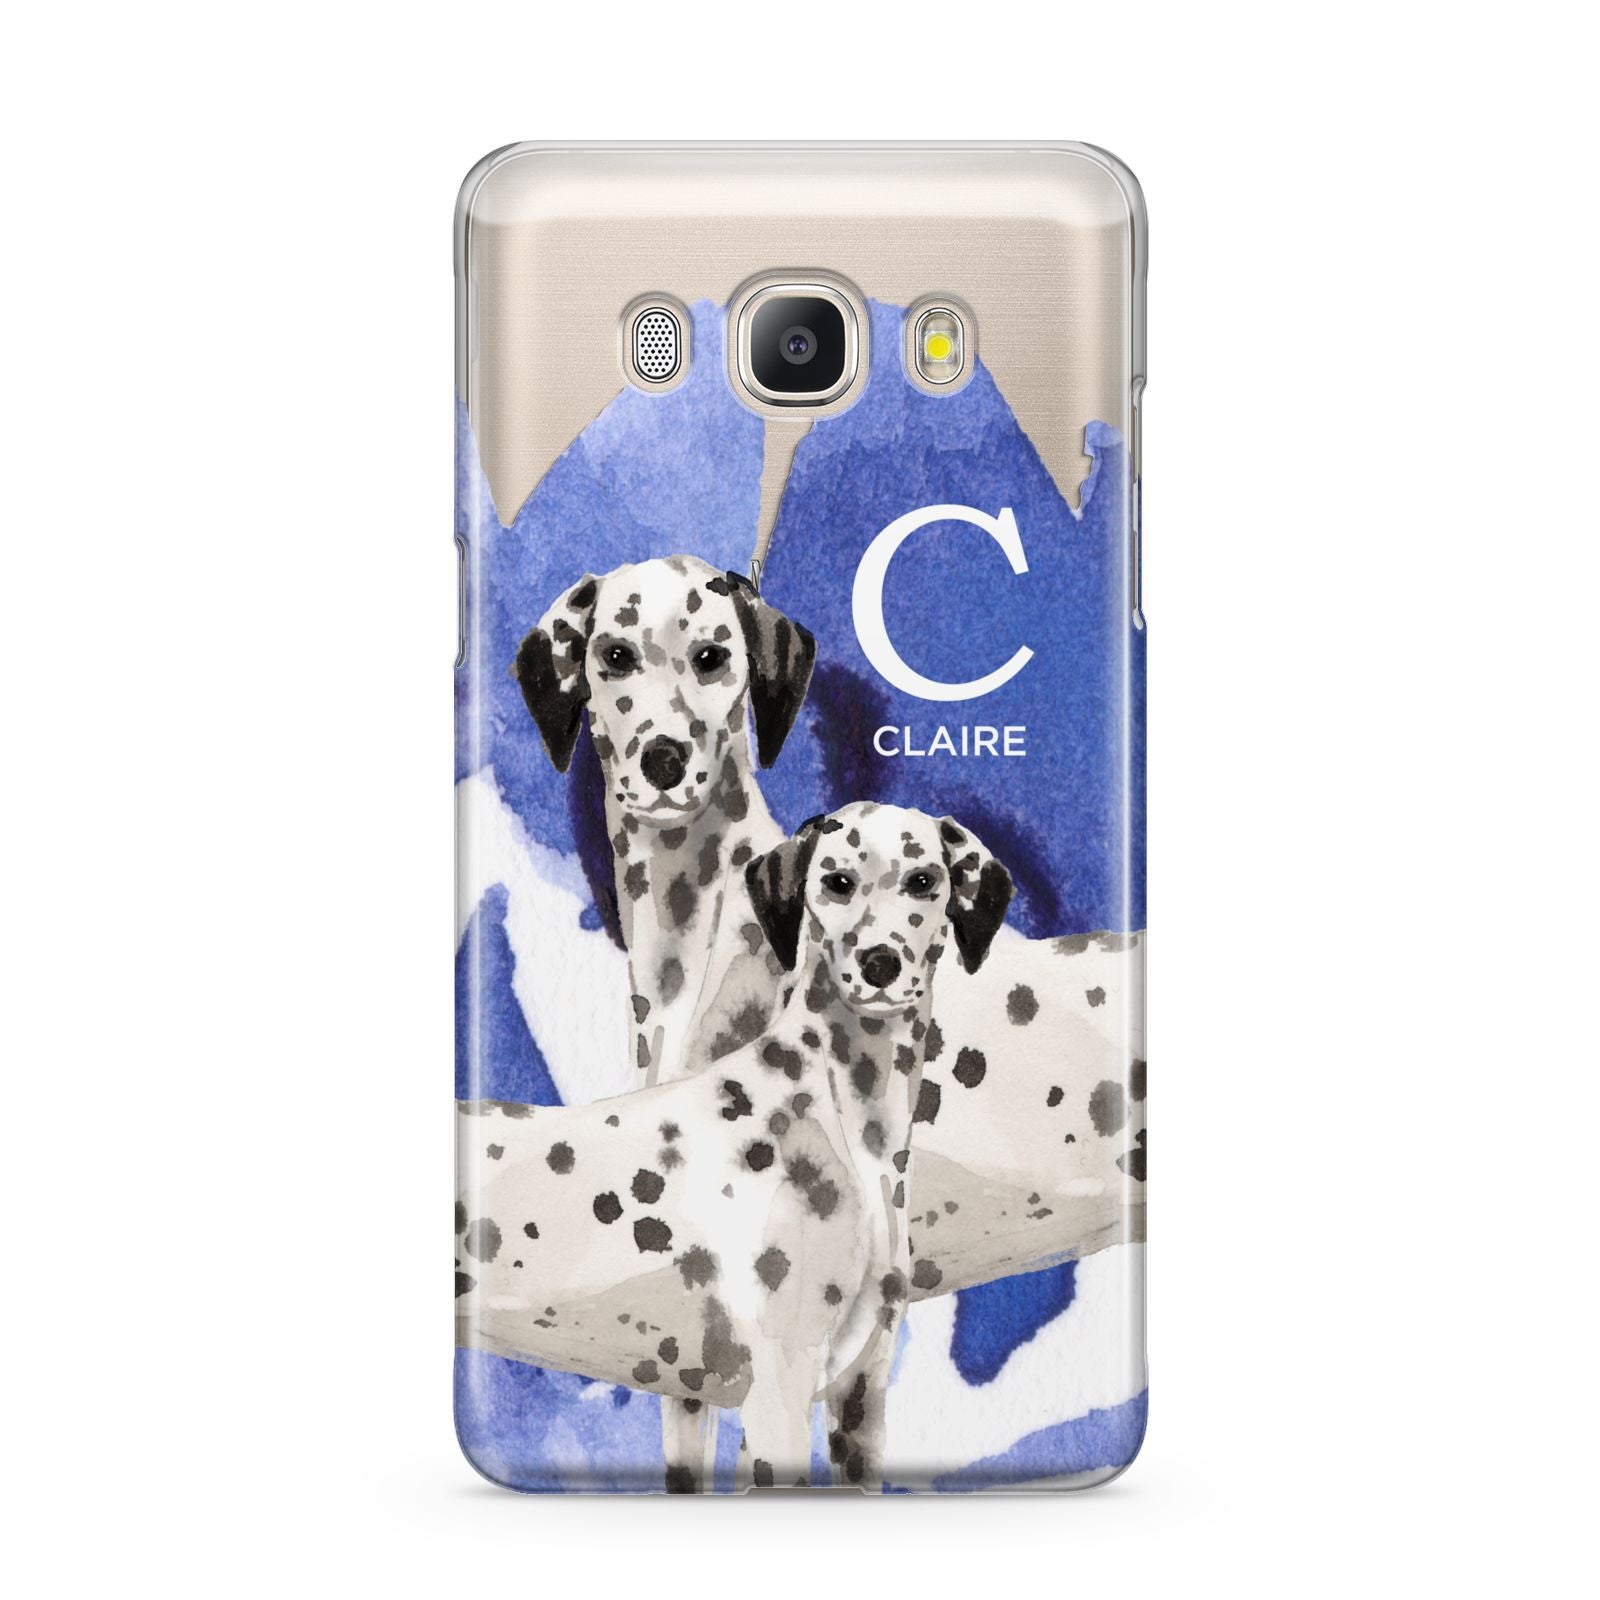 Personalised Dalmatian Samsung Galaxy J5 2016 Case